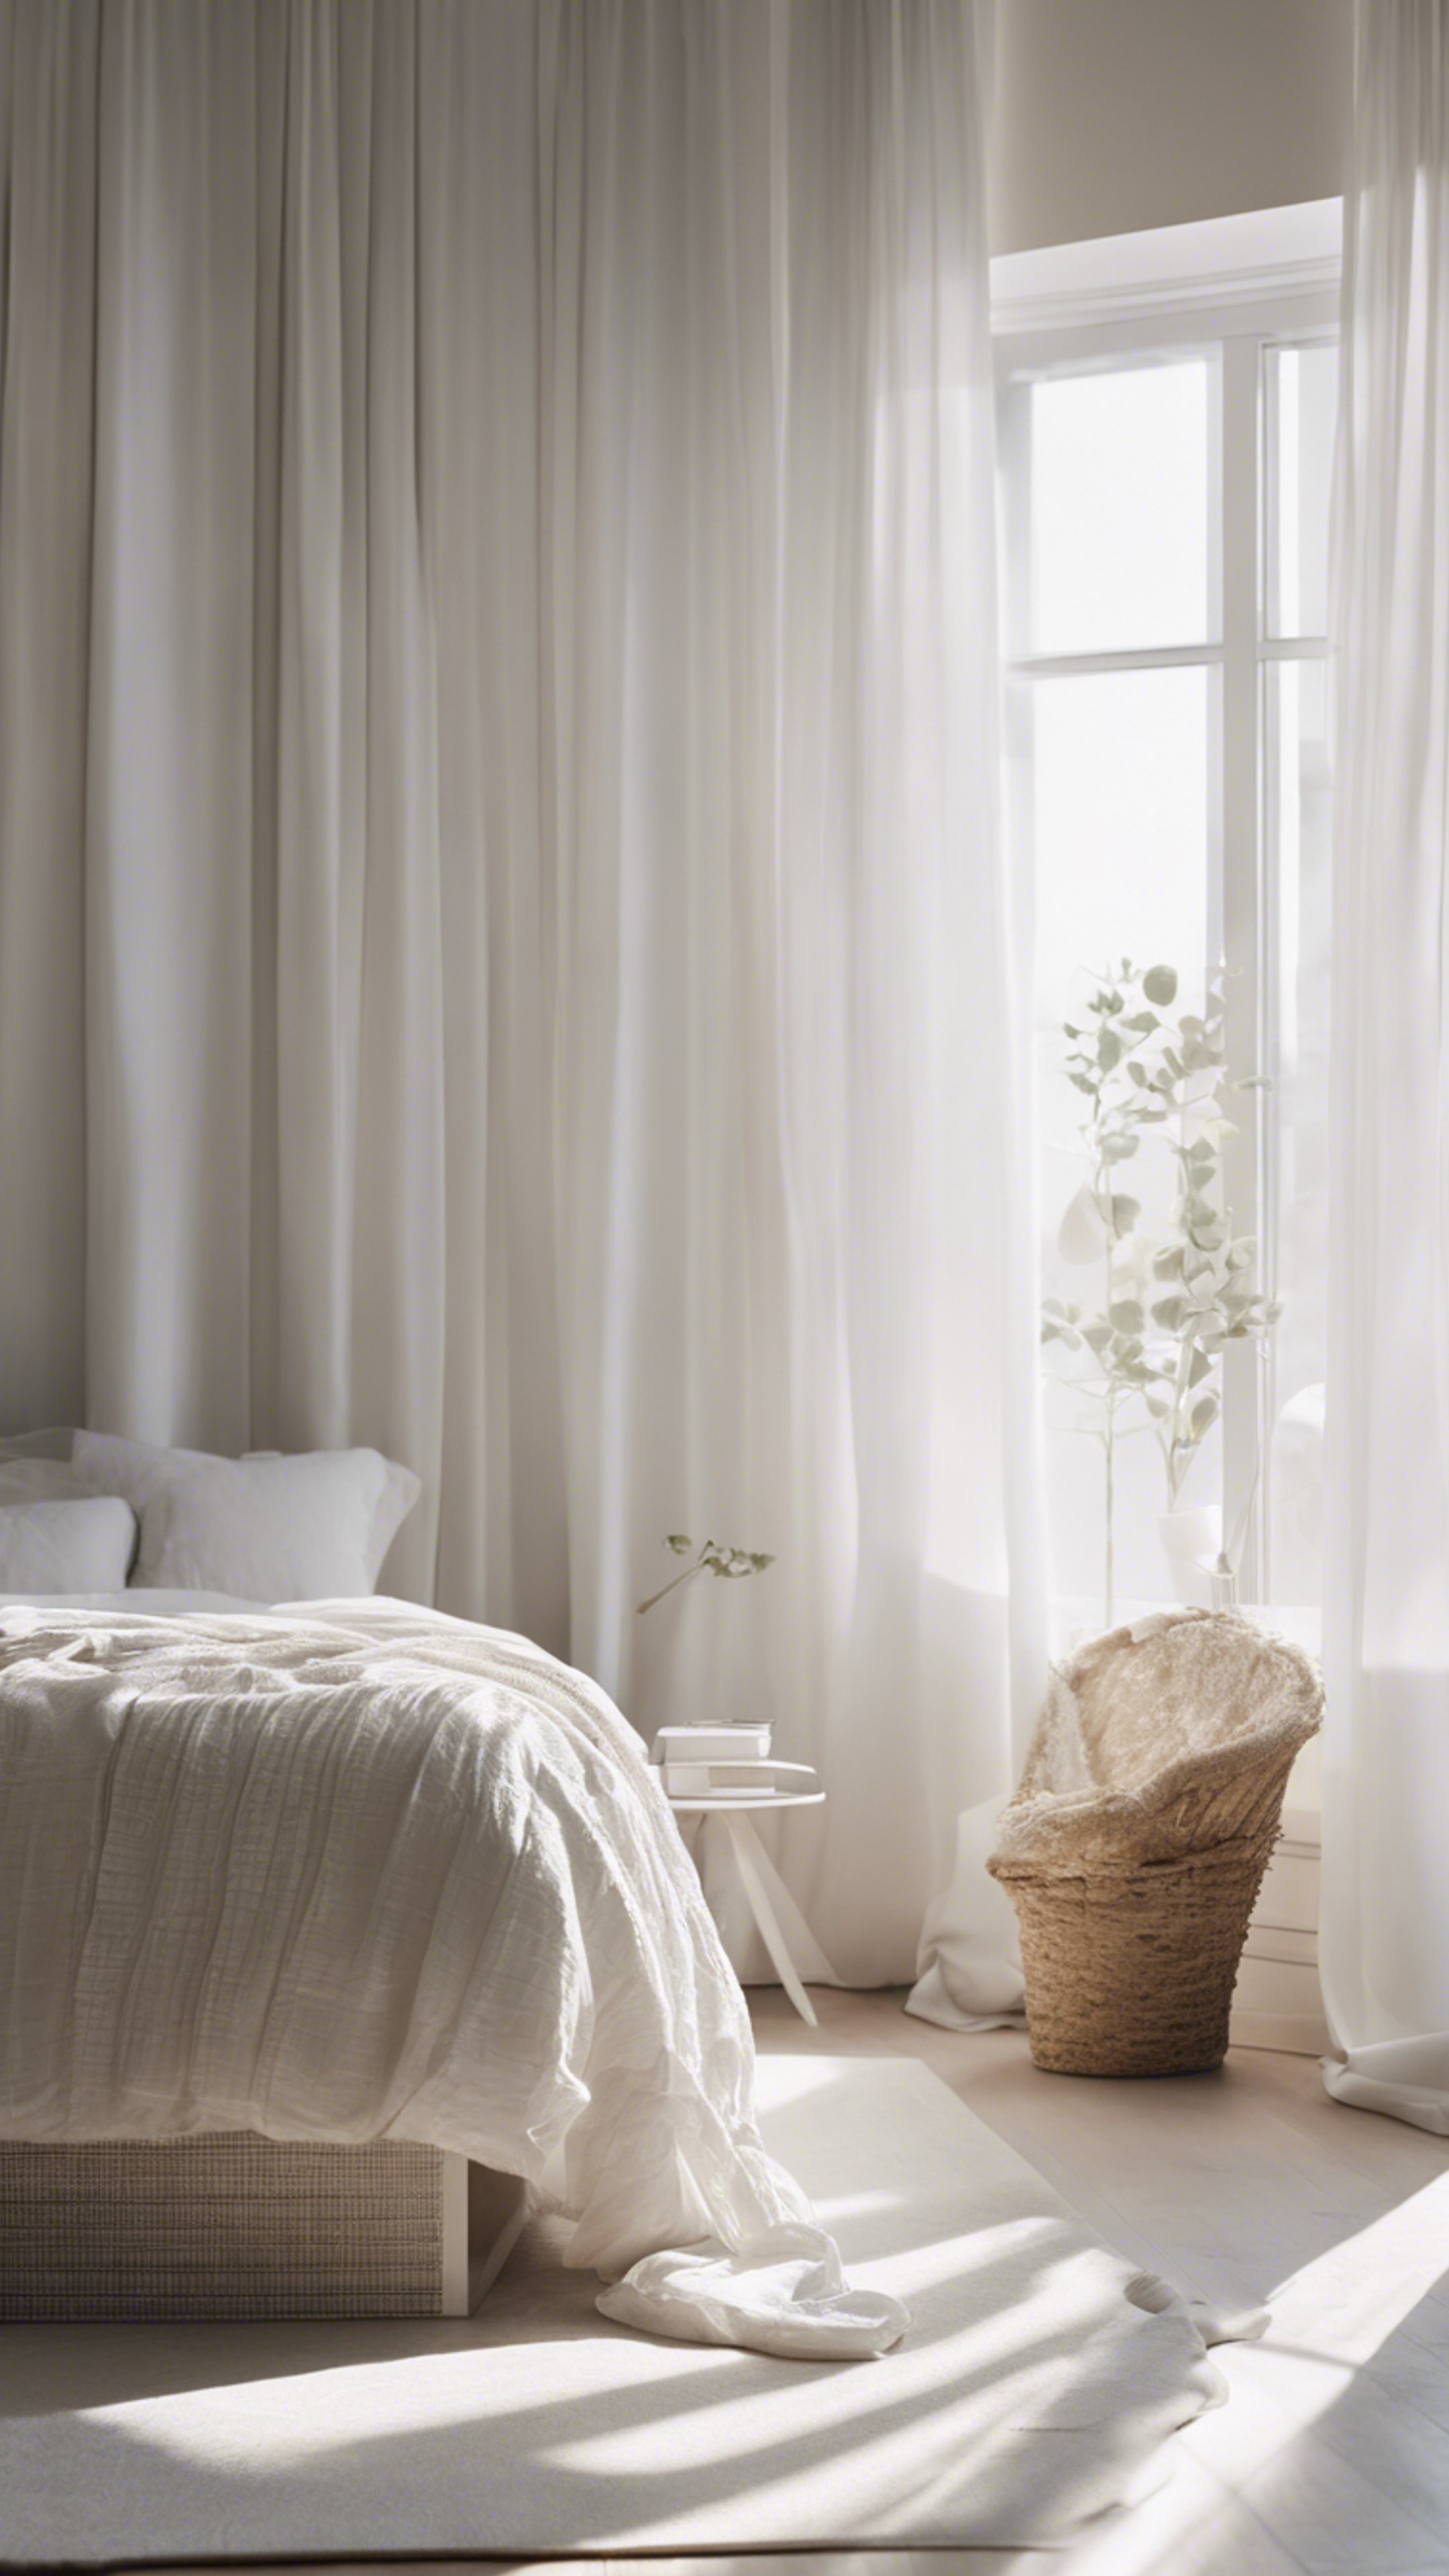 A serene white bedroom with a minimalist aesthetic, sunlight streaming through sheer curtains Tapeta[e50a9fa27884450ea562]